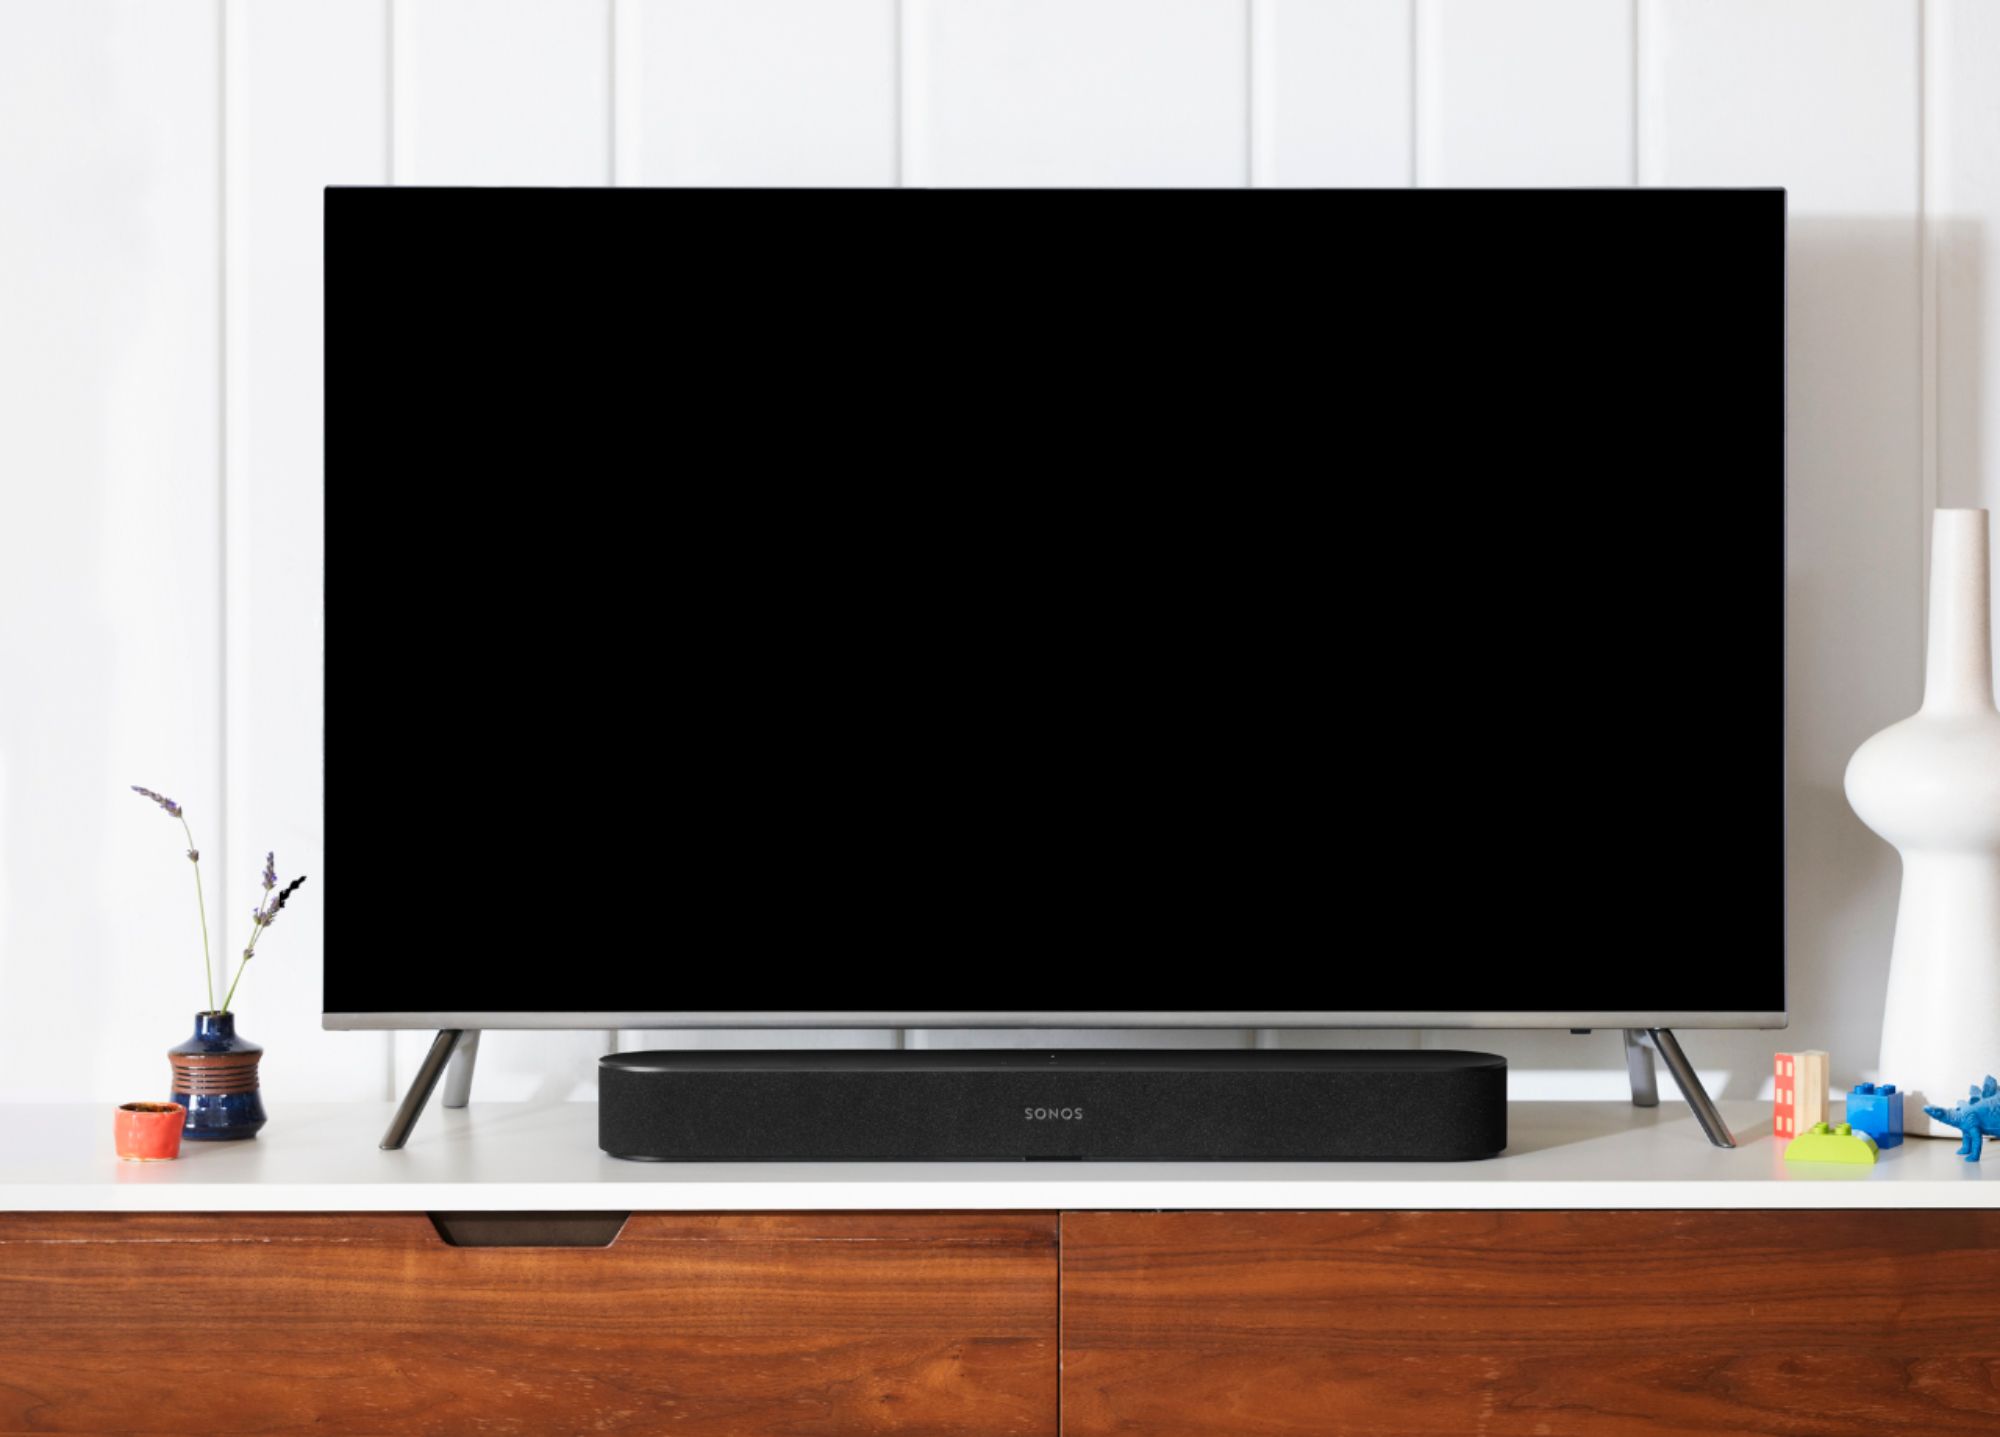 Beam: The Smart TV Soundbar with HDMI Input